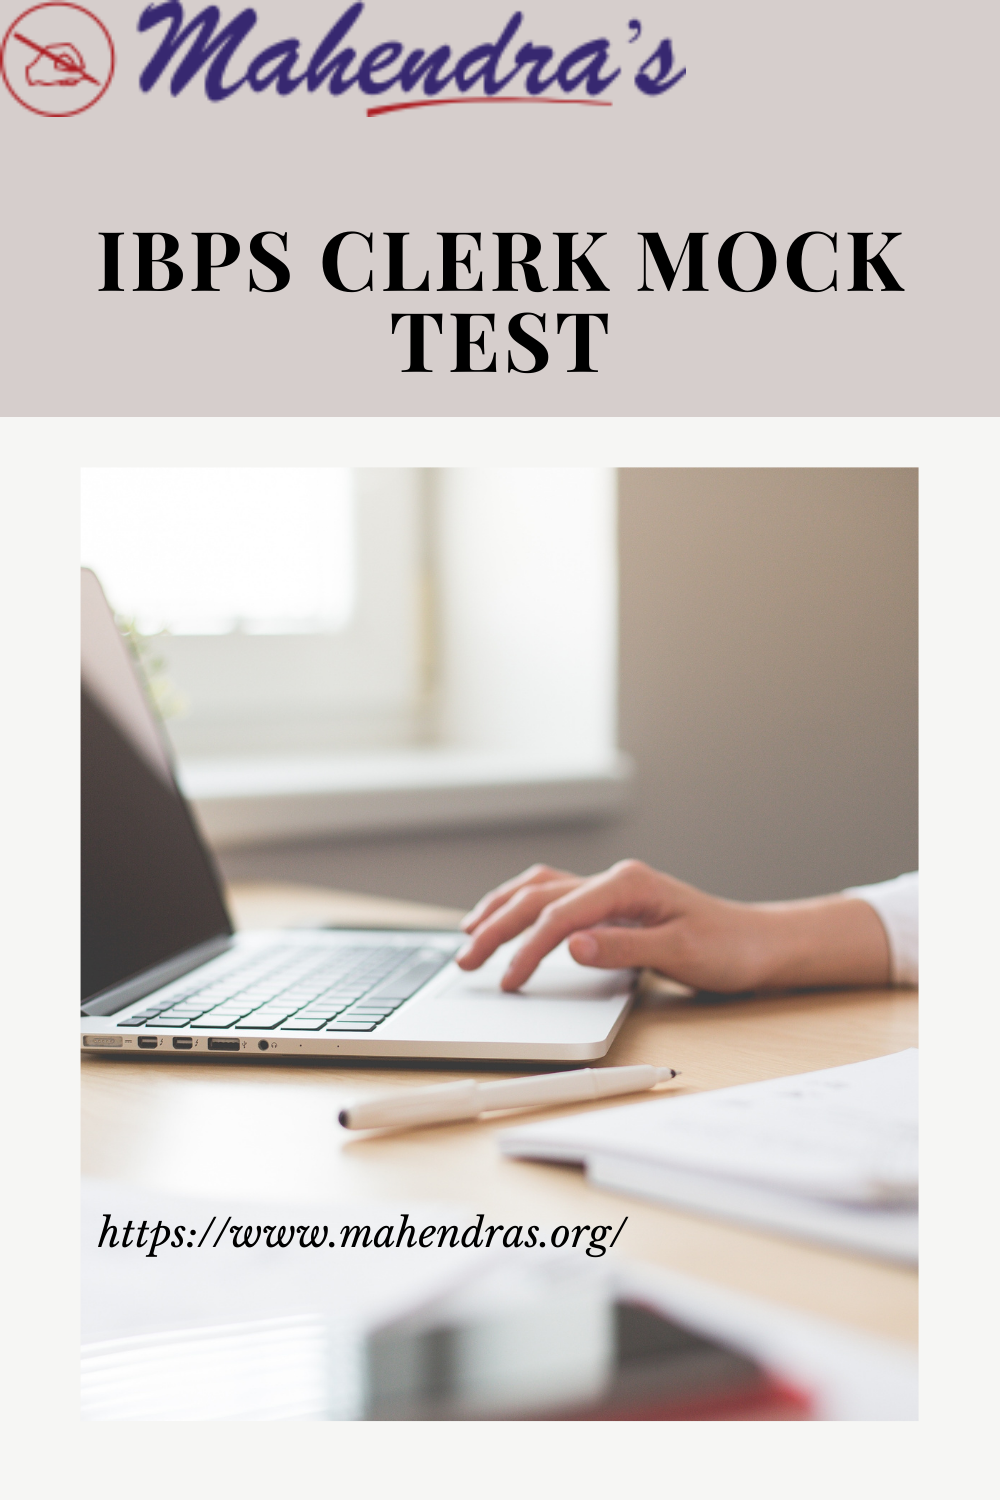 IBPS CLERK MOCK TEST